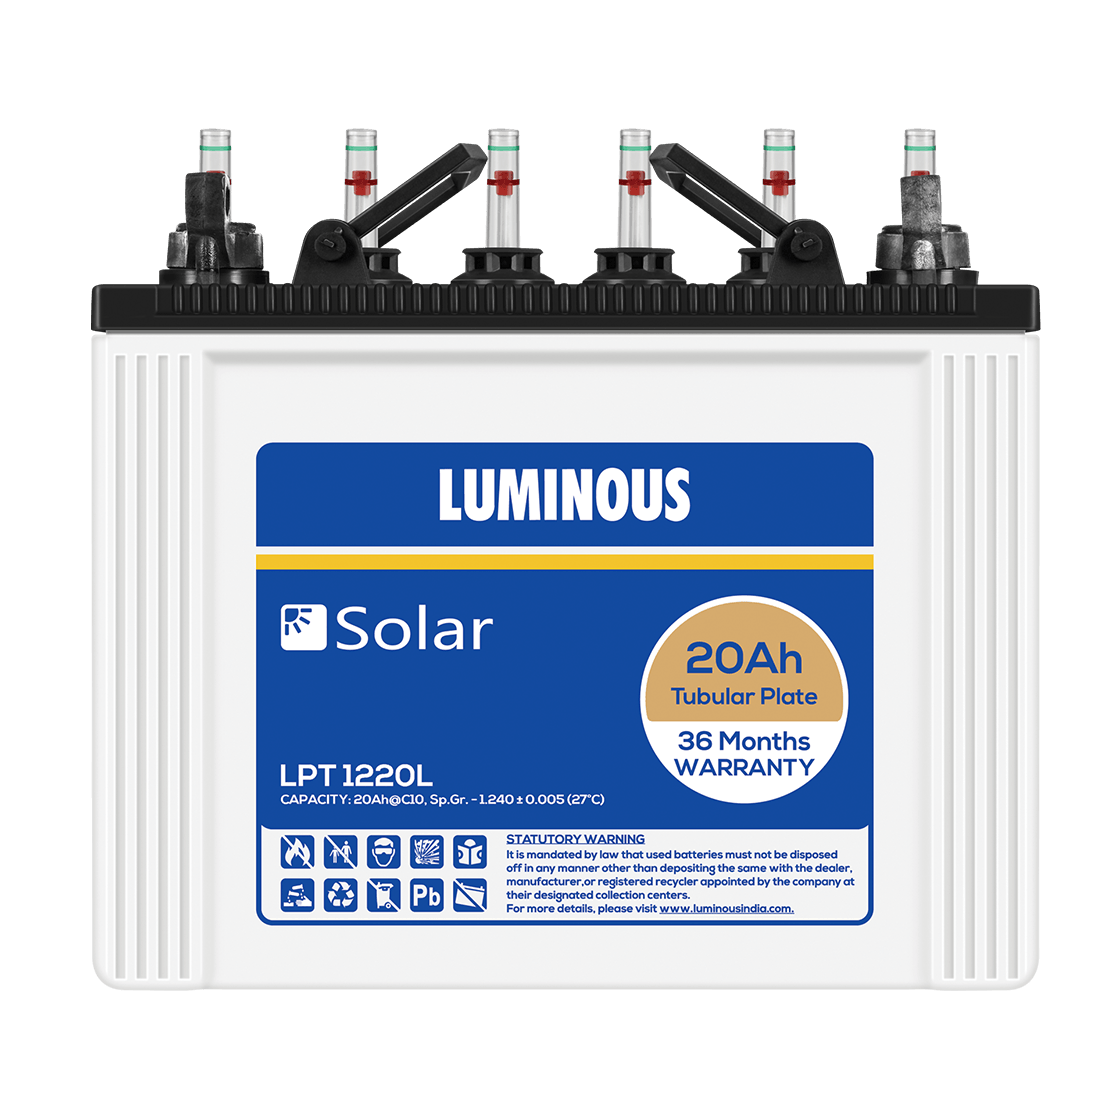 Luminous Battery Logo - Buy LPT 1220L Solar Batteries Online